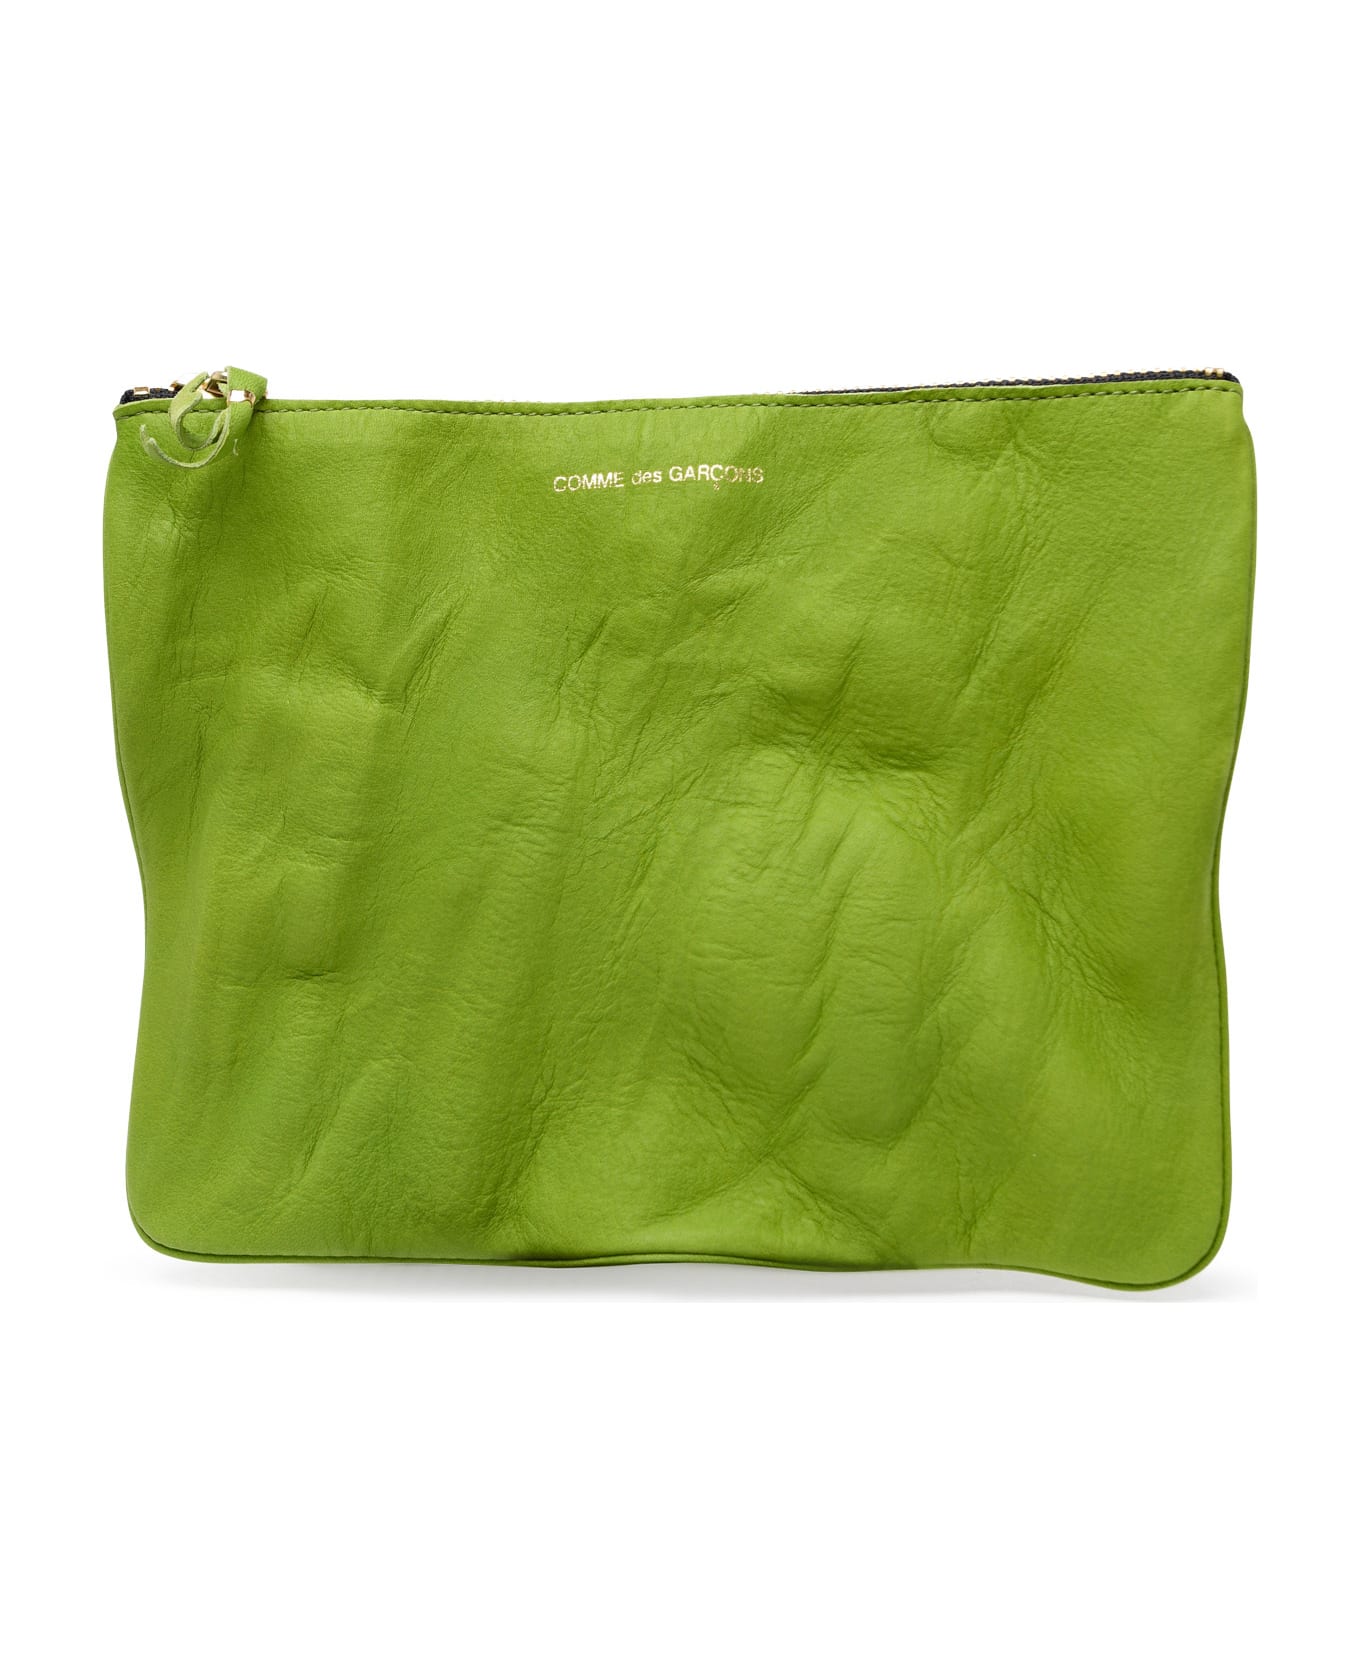 Comme des Garçons Wallet Green Leather Envelope - Green クラッチバッグ